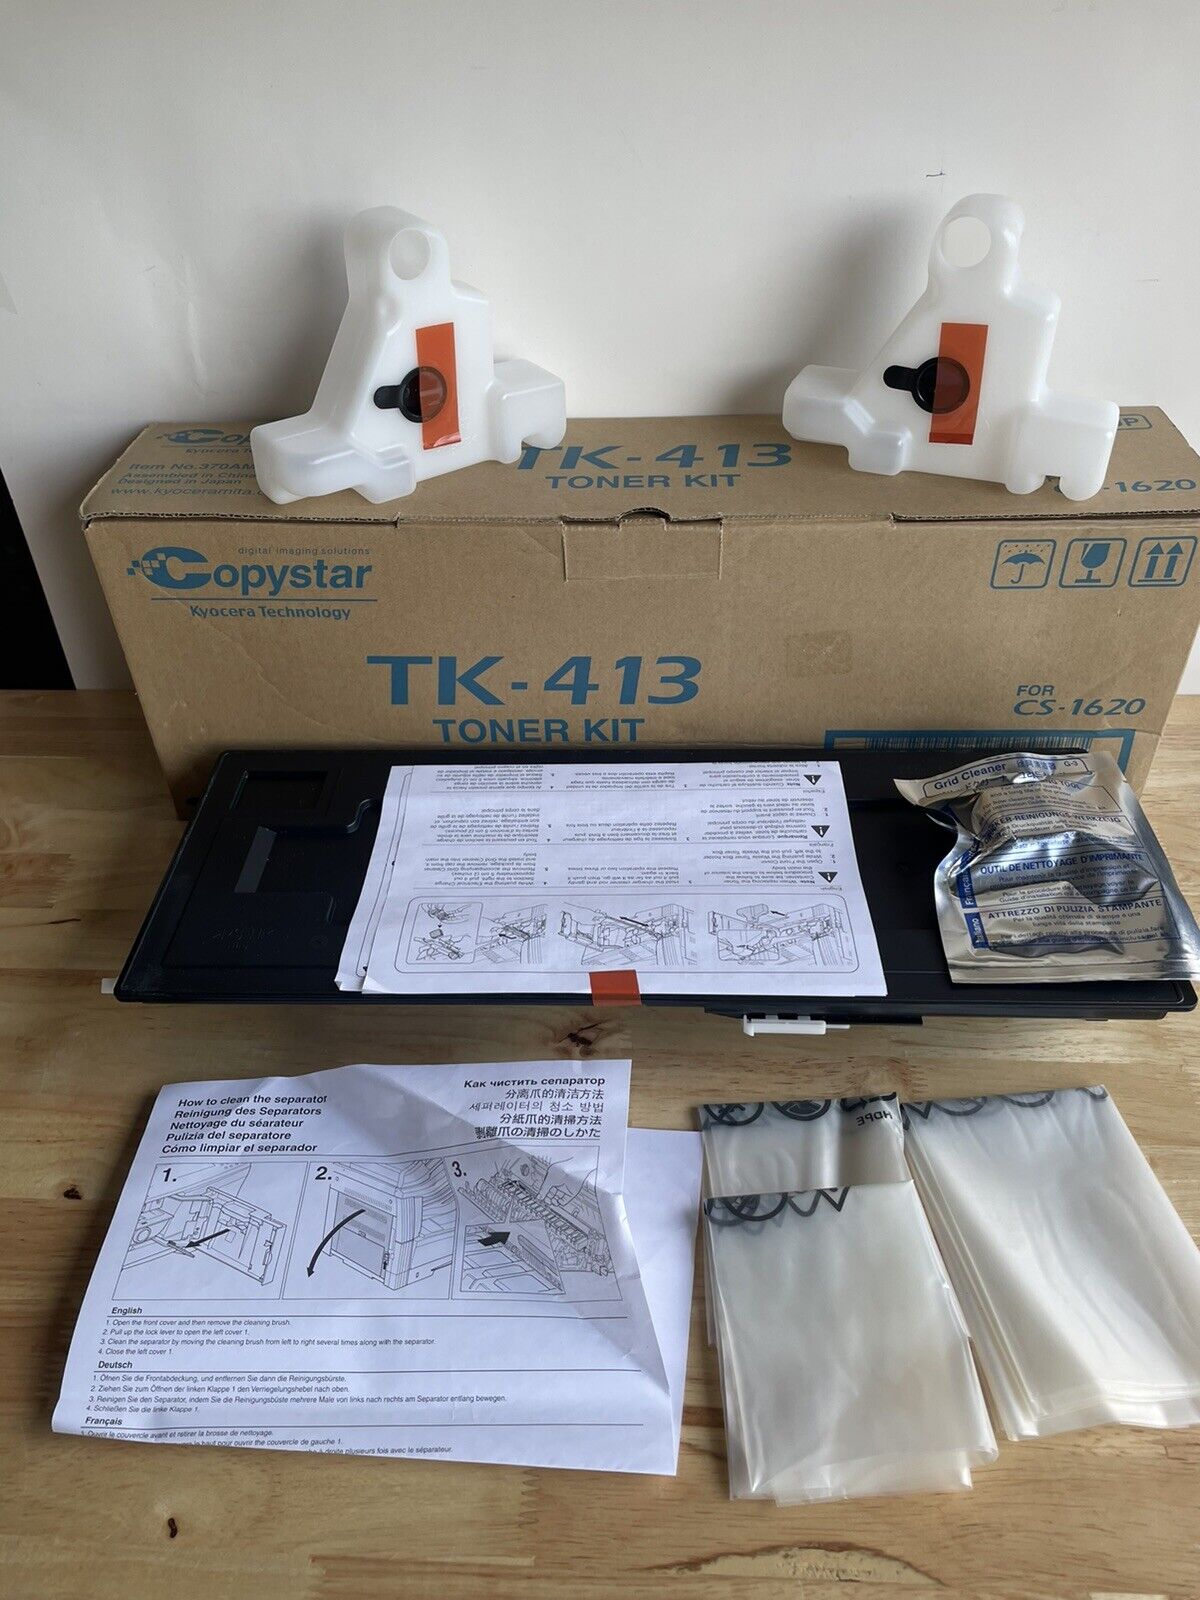 Kyocera Copystar TK-413 TK413 Black Toner Kit 37034006 CS-1620 New Sealed